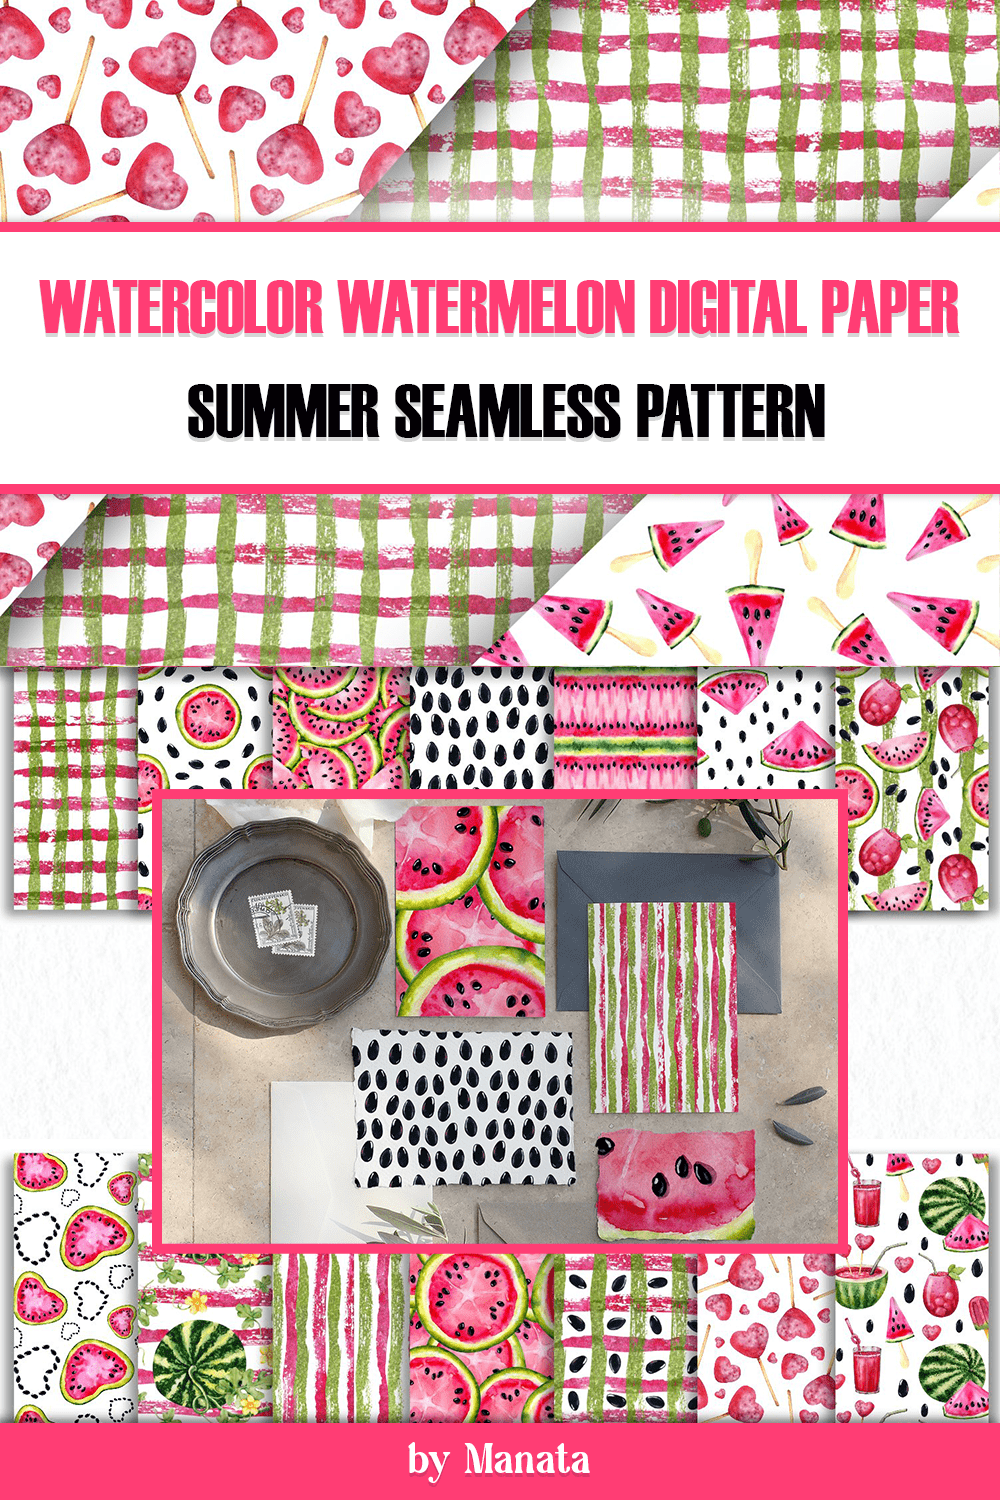 Watercolor watermelon digital paper summer seamless pattern - pinterest image preview.